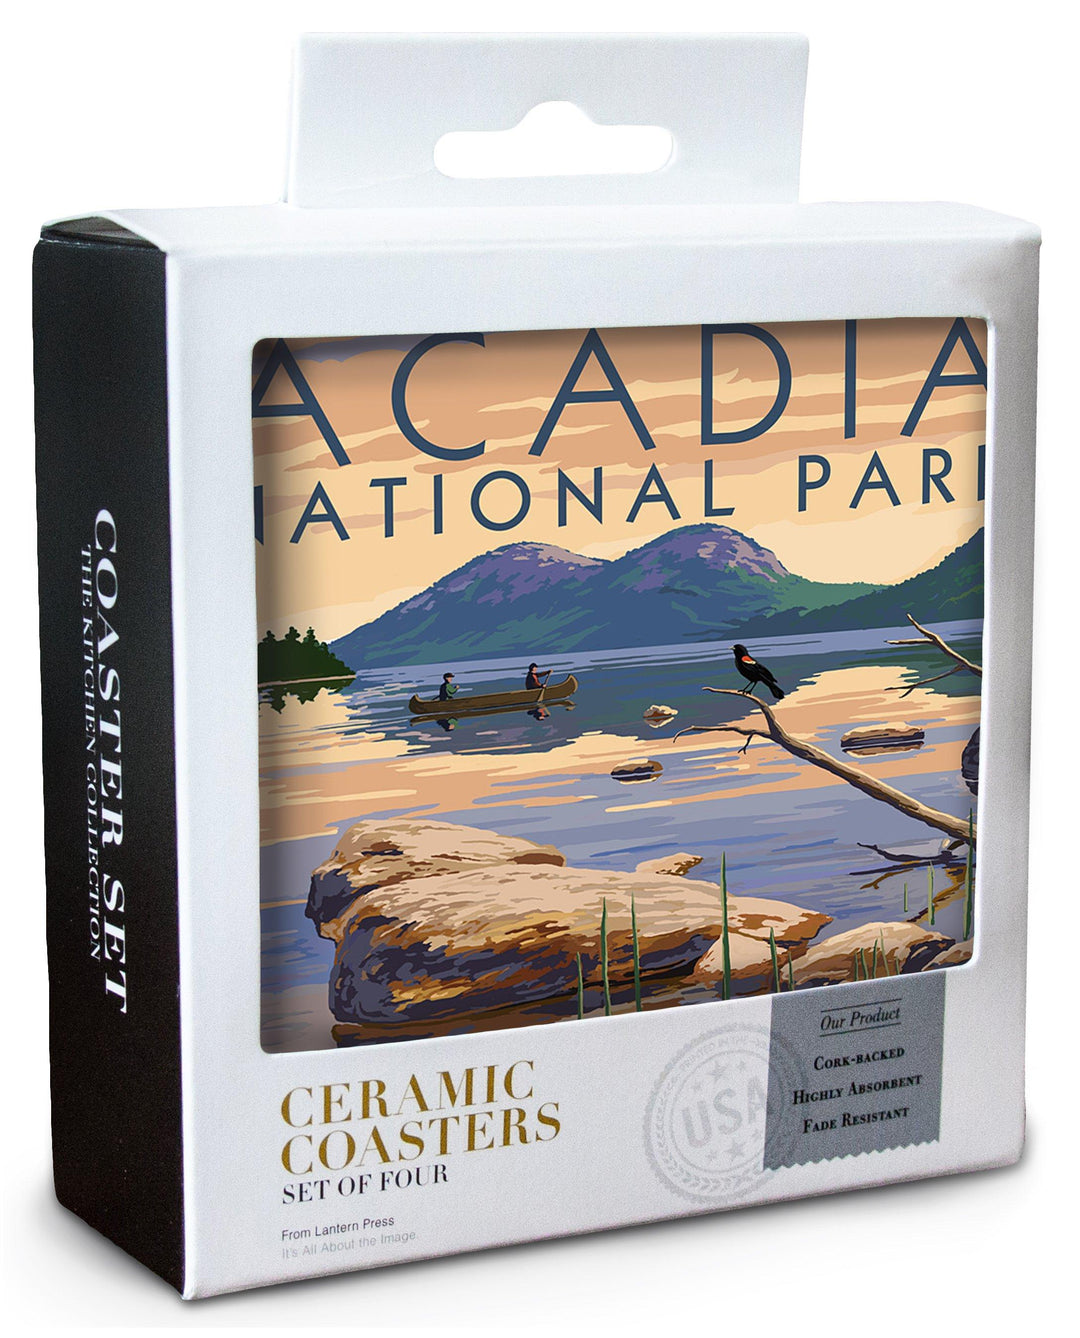 Acadia National Park, Maine, Celebrating 100 Years, Jordan Pond, Lantern Press Artwork, Coaster Set Coasters Lantern Press 